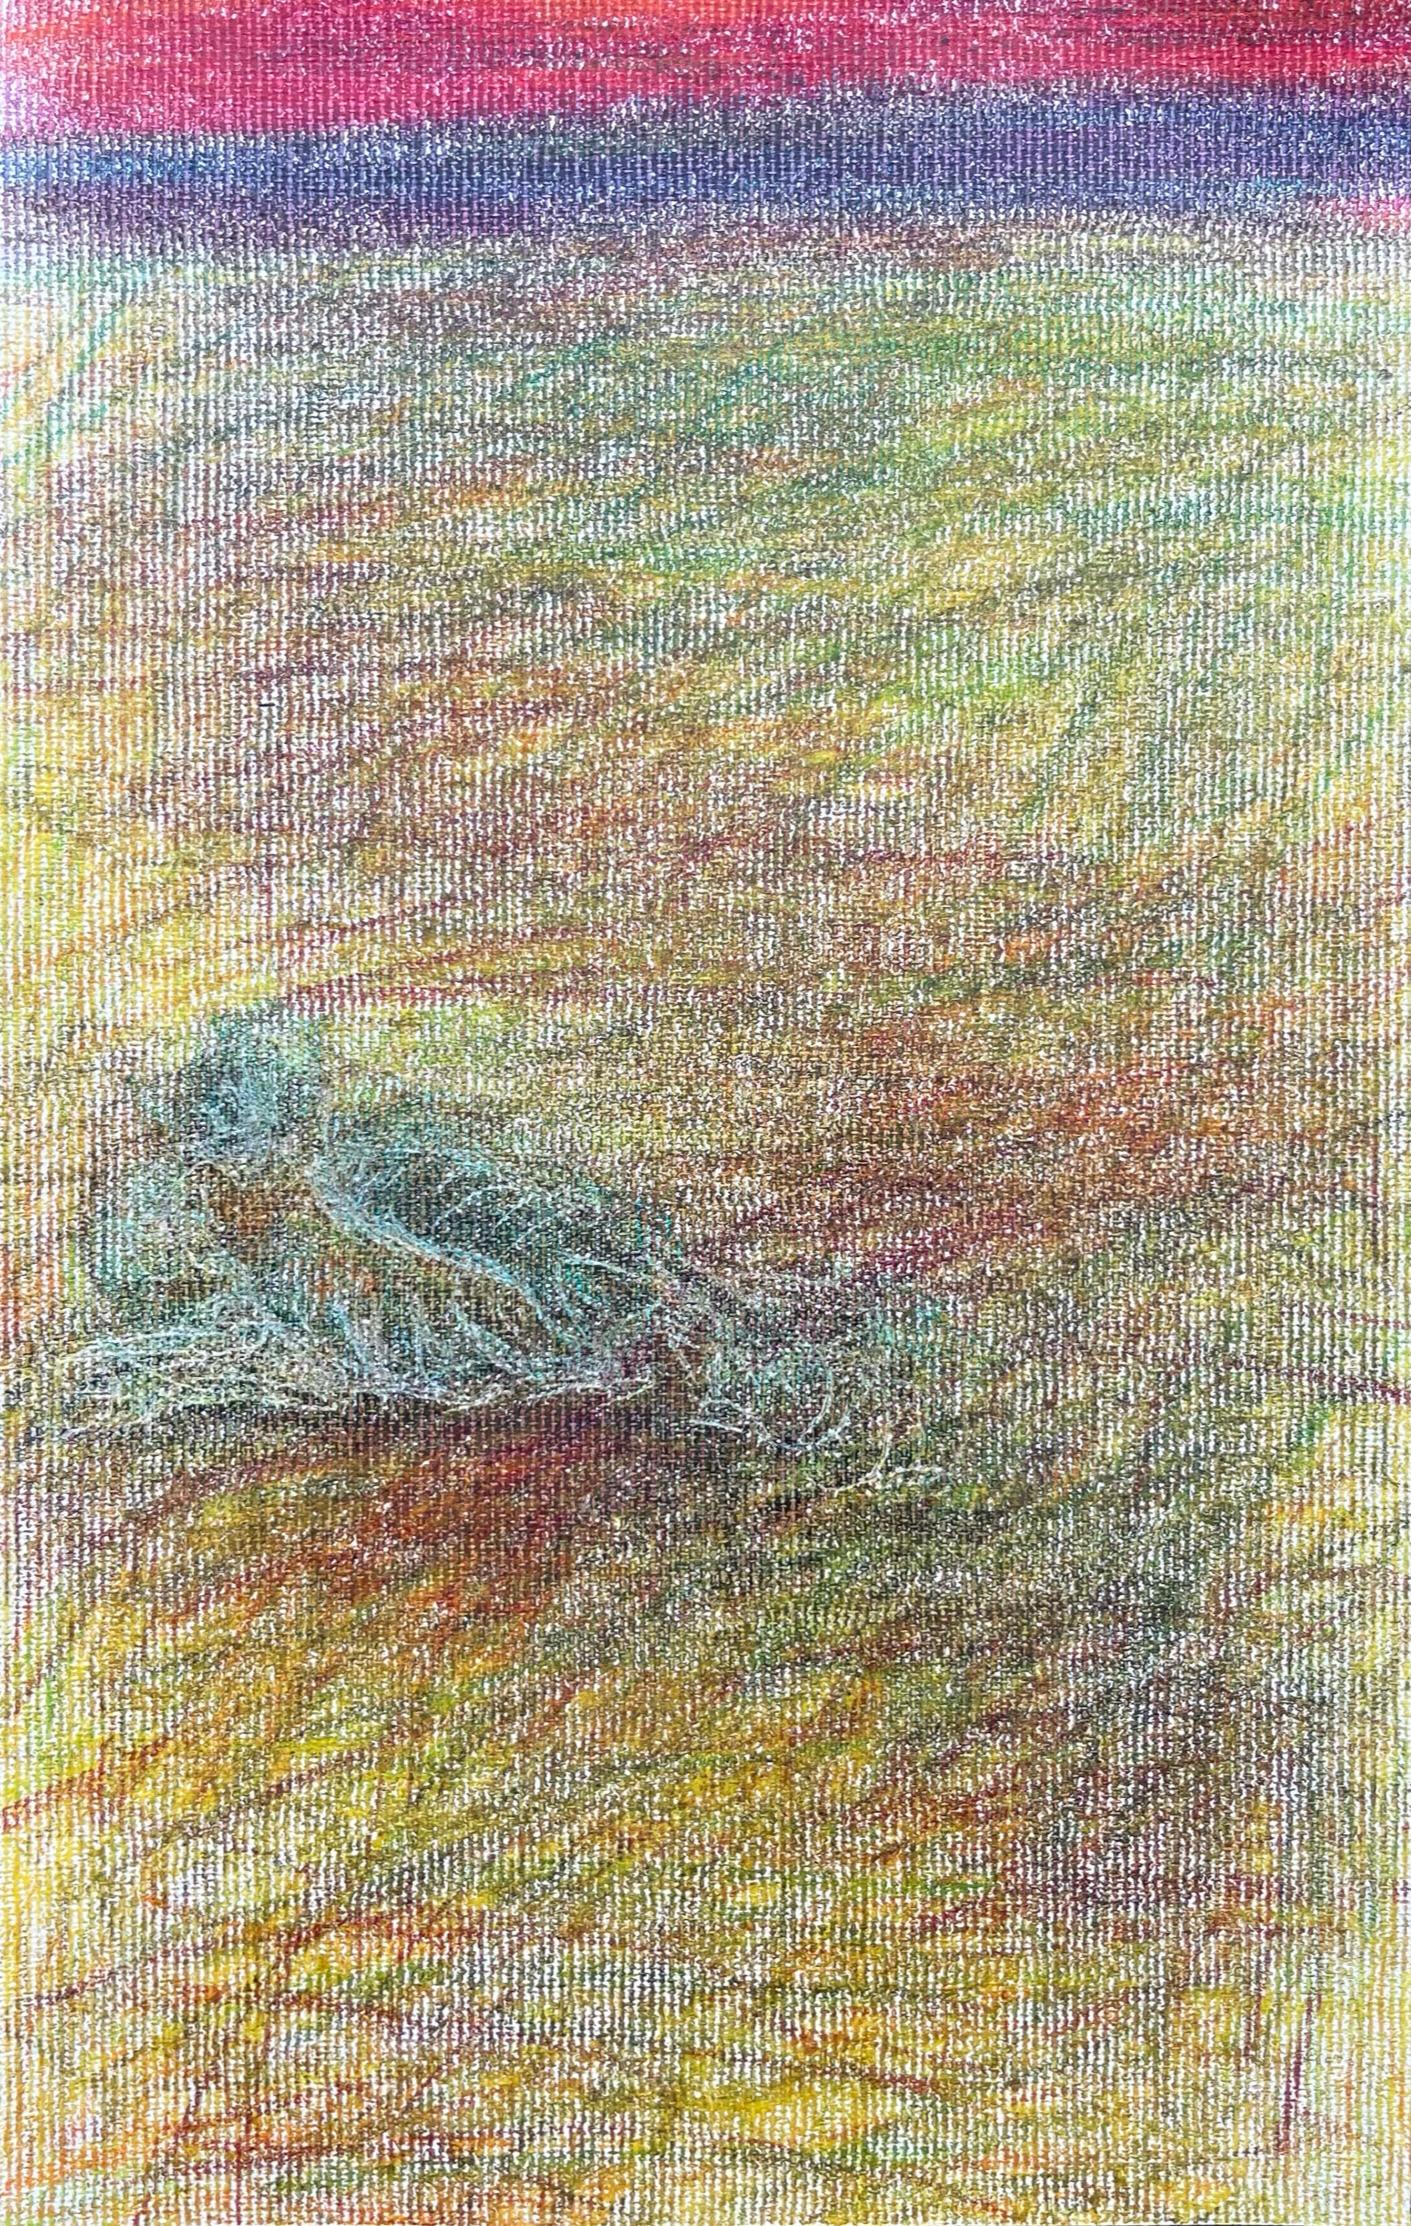 Figurative Art Zsolt Berszán - Body in the Field #11 - Landscape, Coloured Pencil, 21st Century, Red, Blue